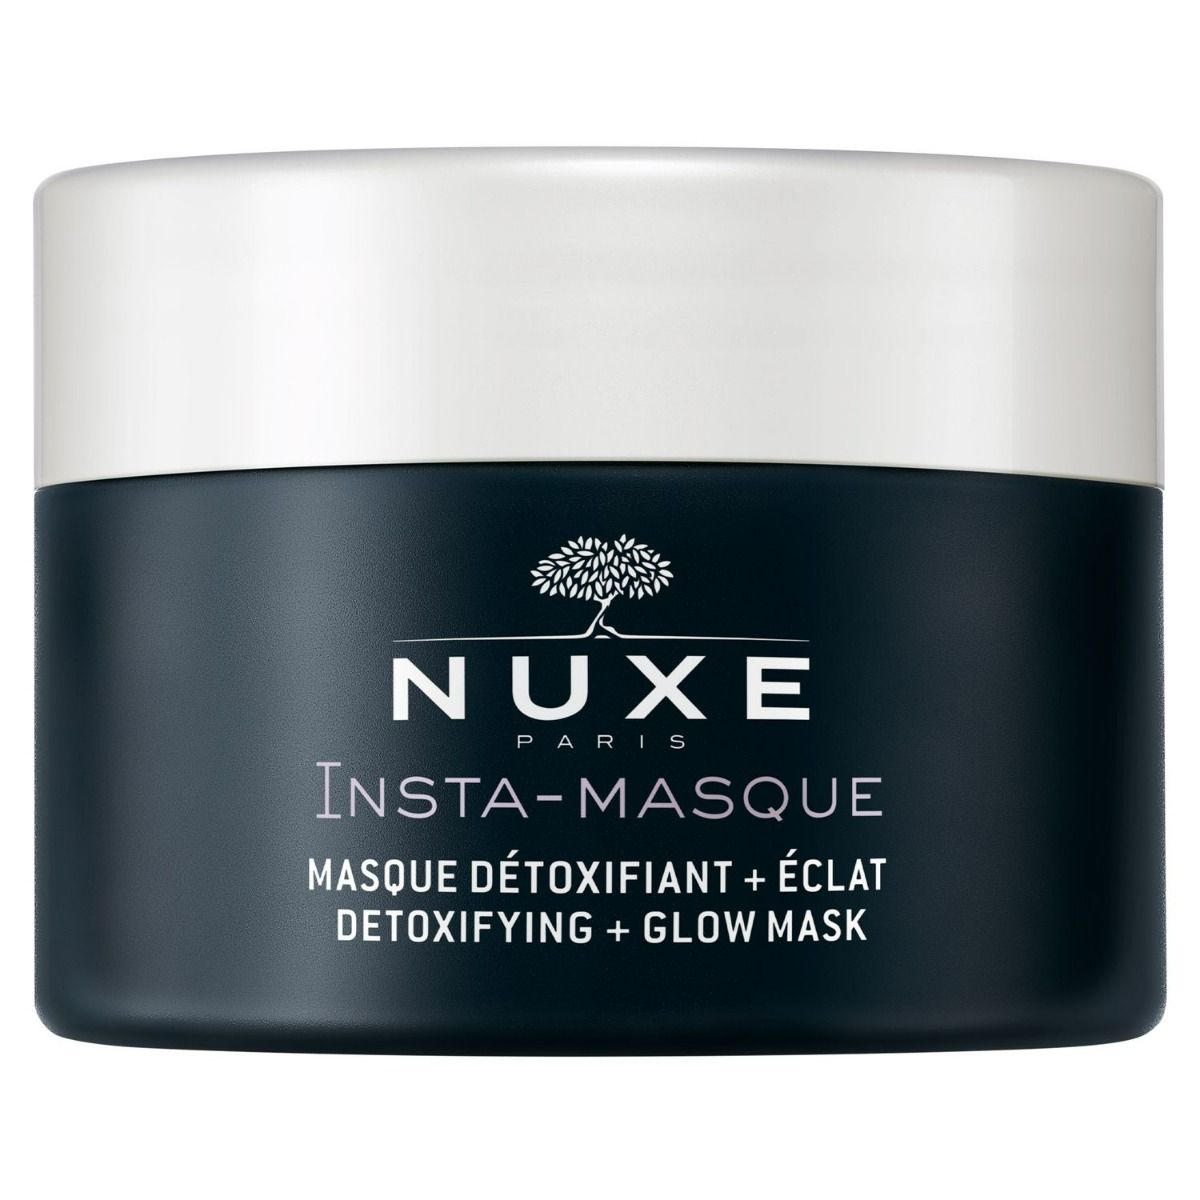 Nuxe Insta-Masque Détoxifiant + Eclat медицинская маска, 50 ml спивакъ цветочная вода розы крым 50 мл